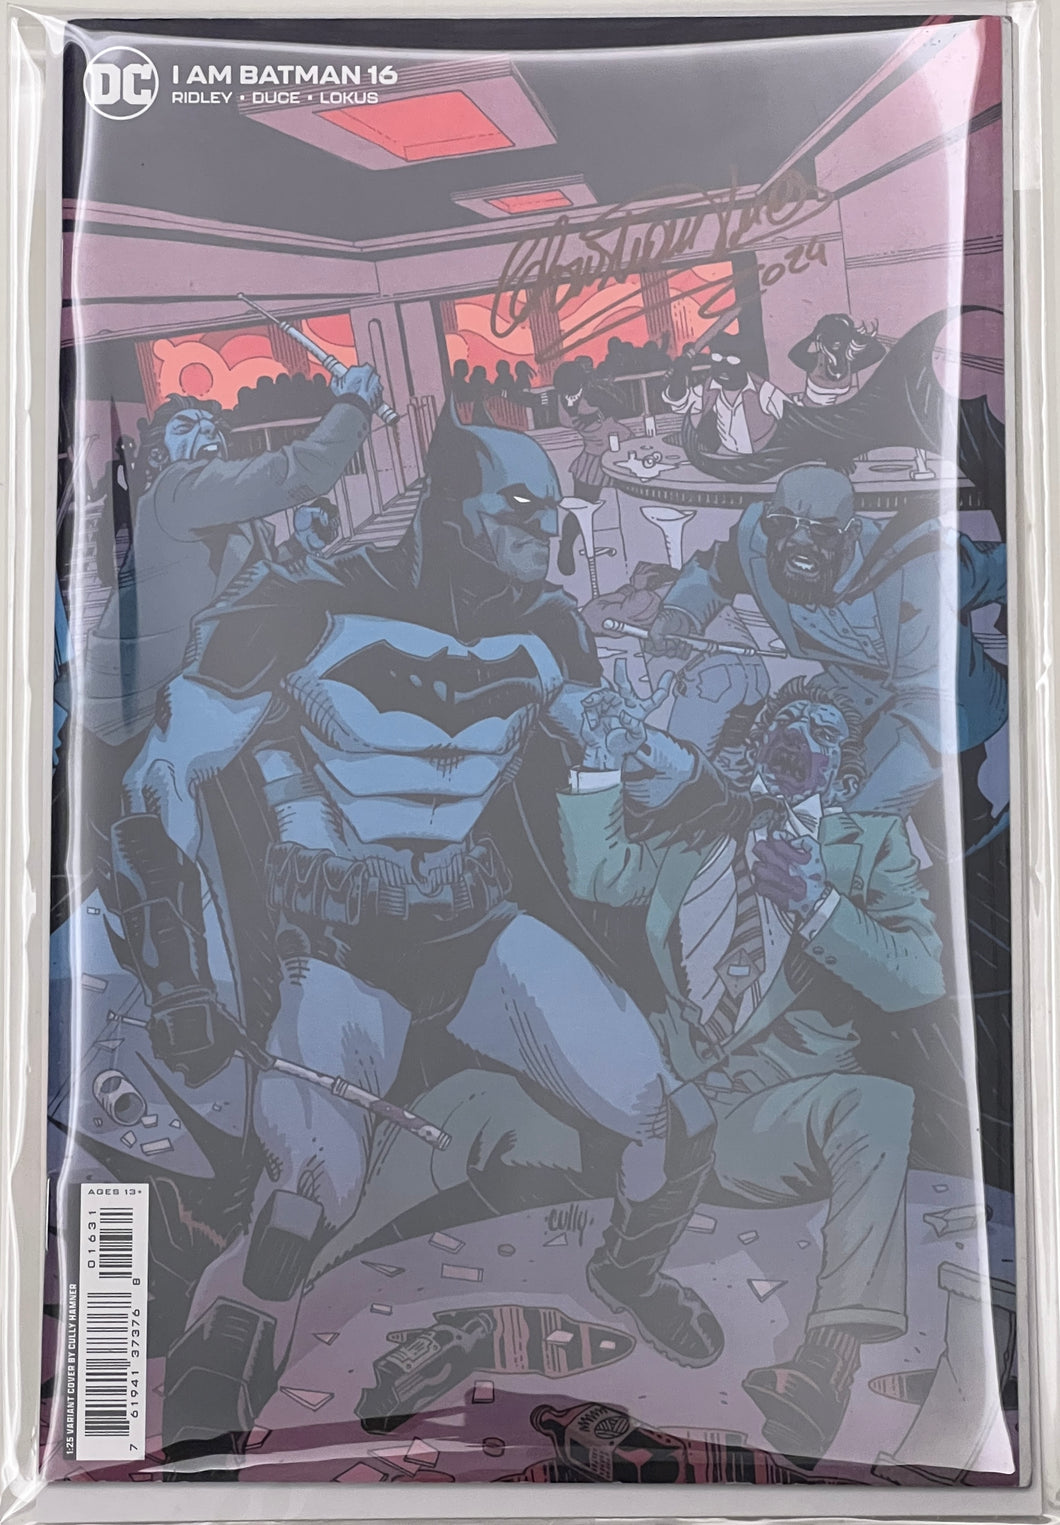 I am Batman #16 signed by Christian Duce